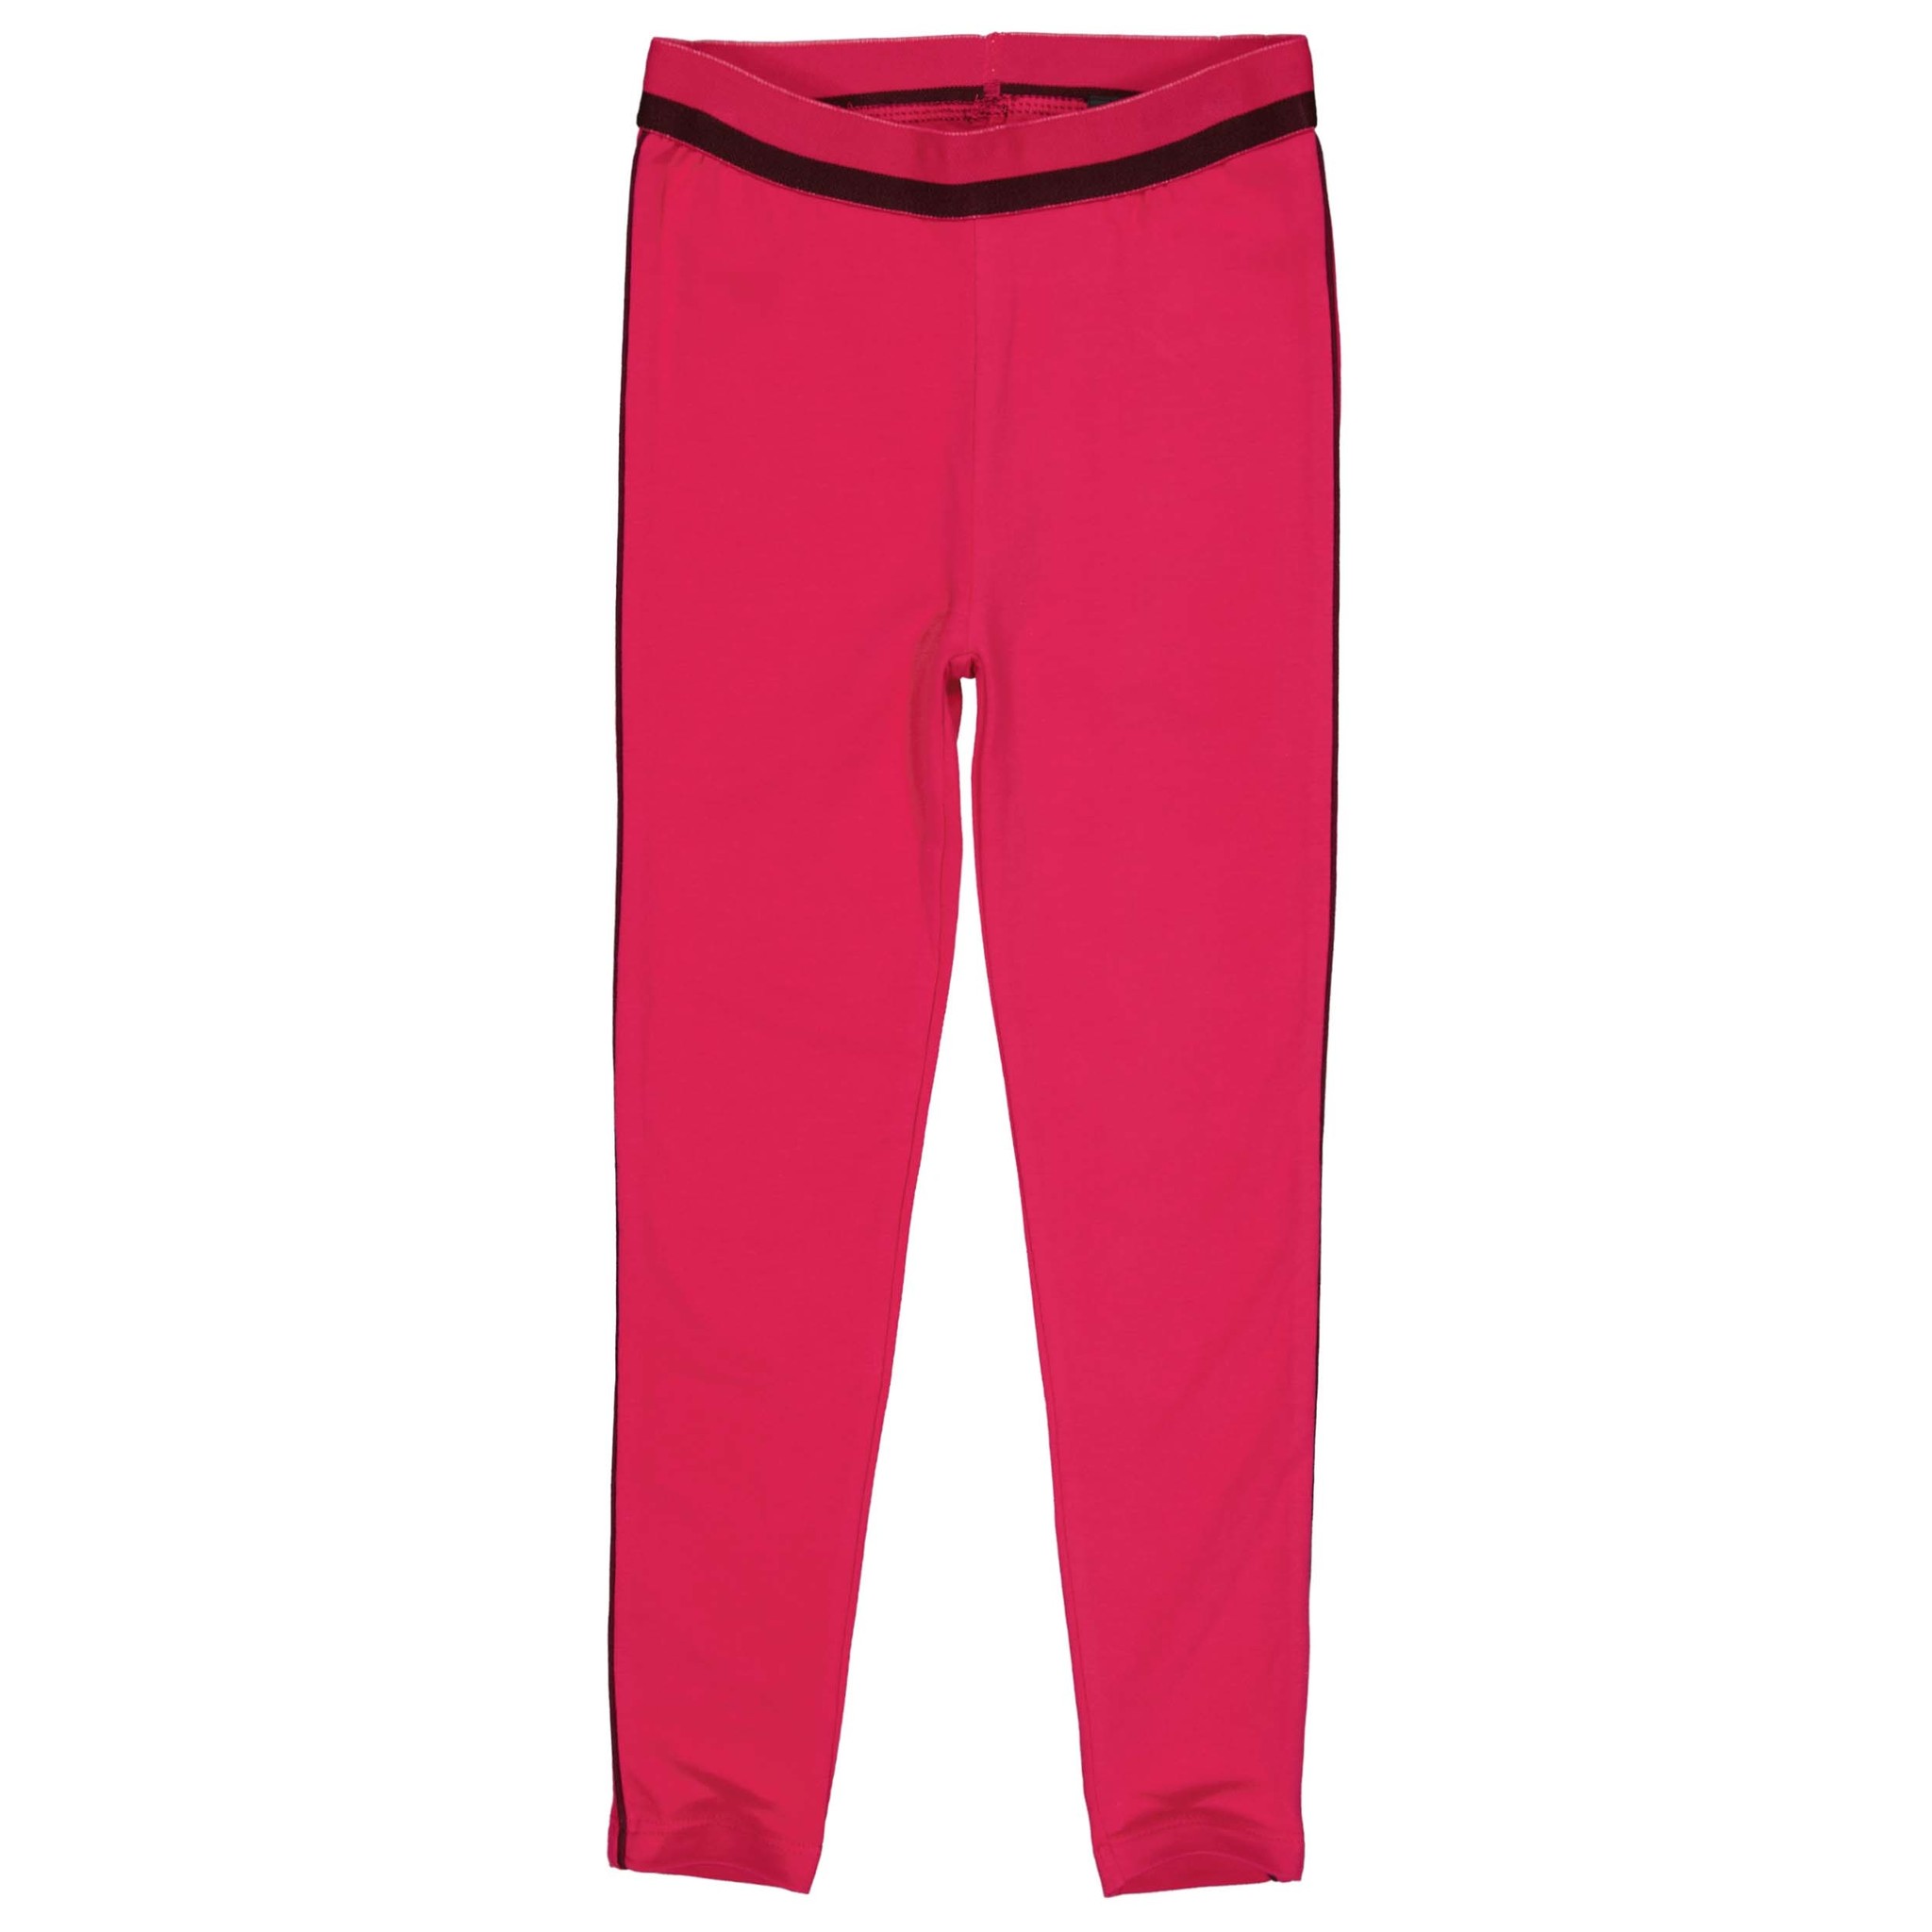 Quapi Meisjes legging - Mara - Fuchsia roze